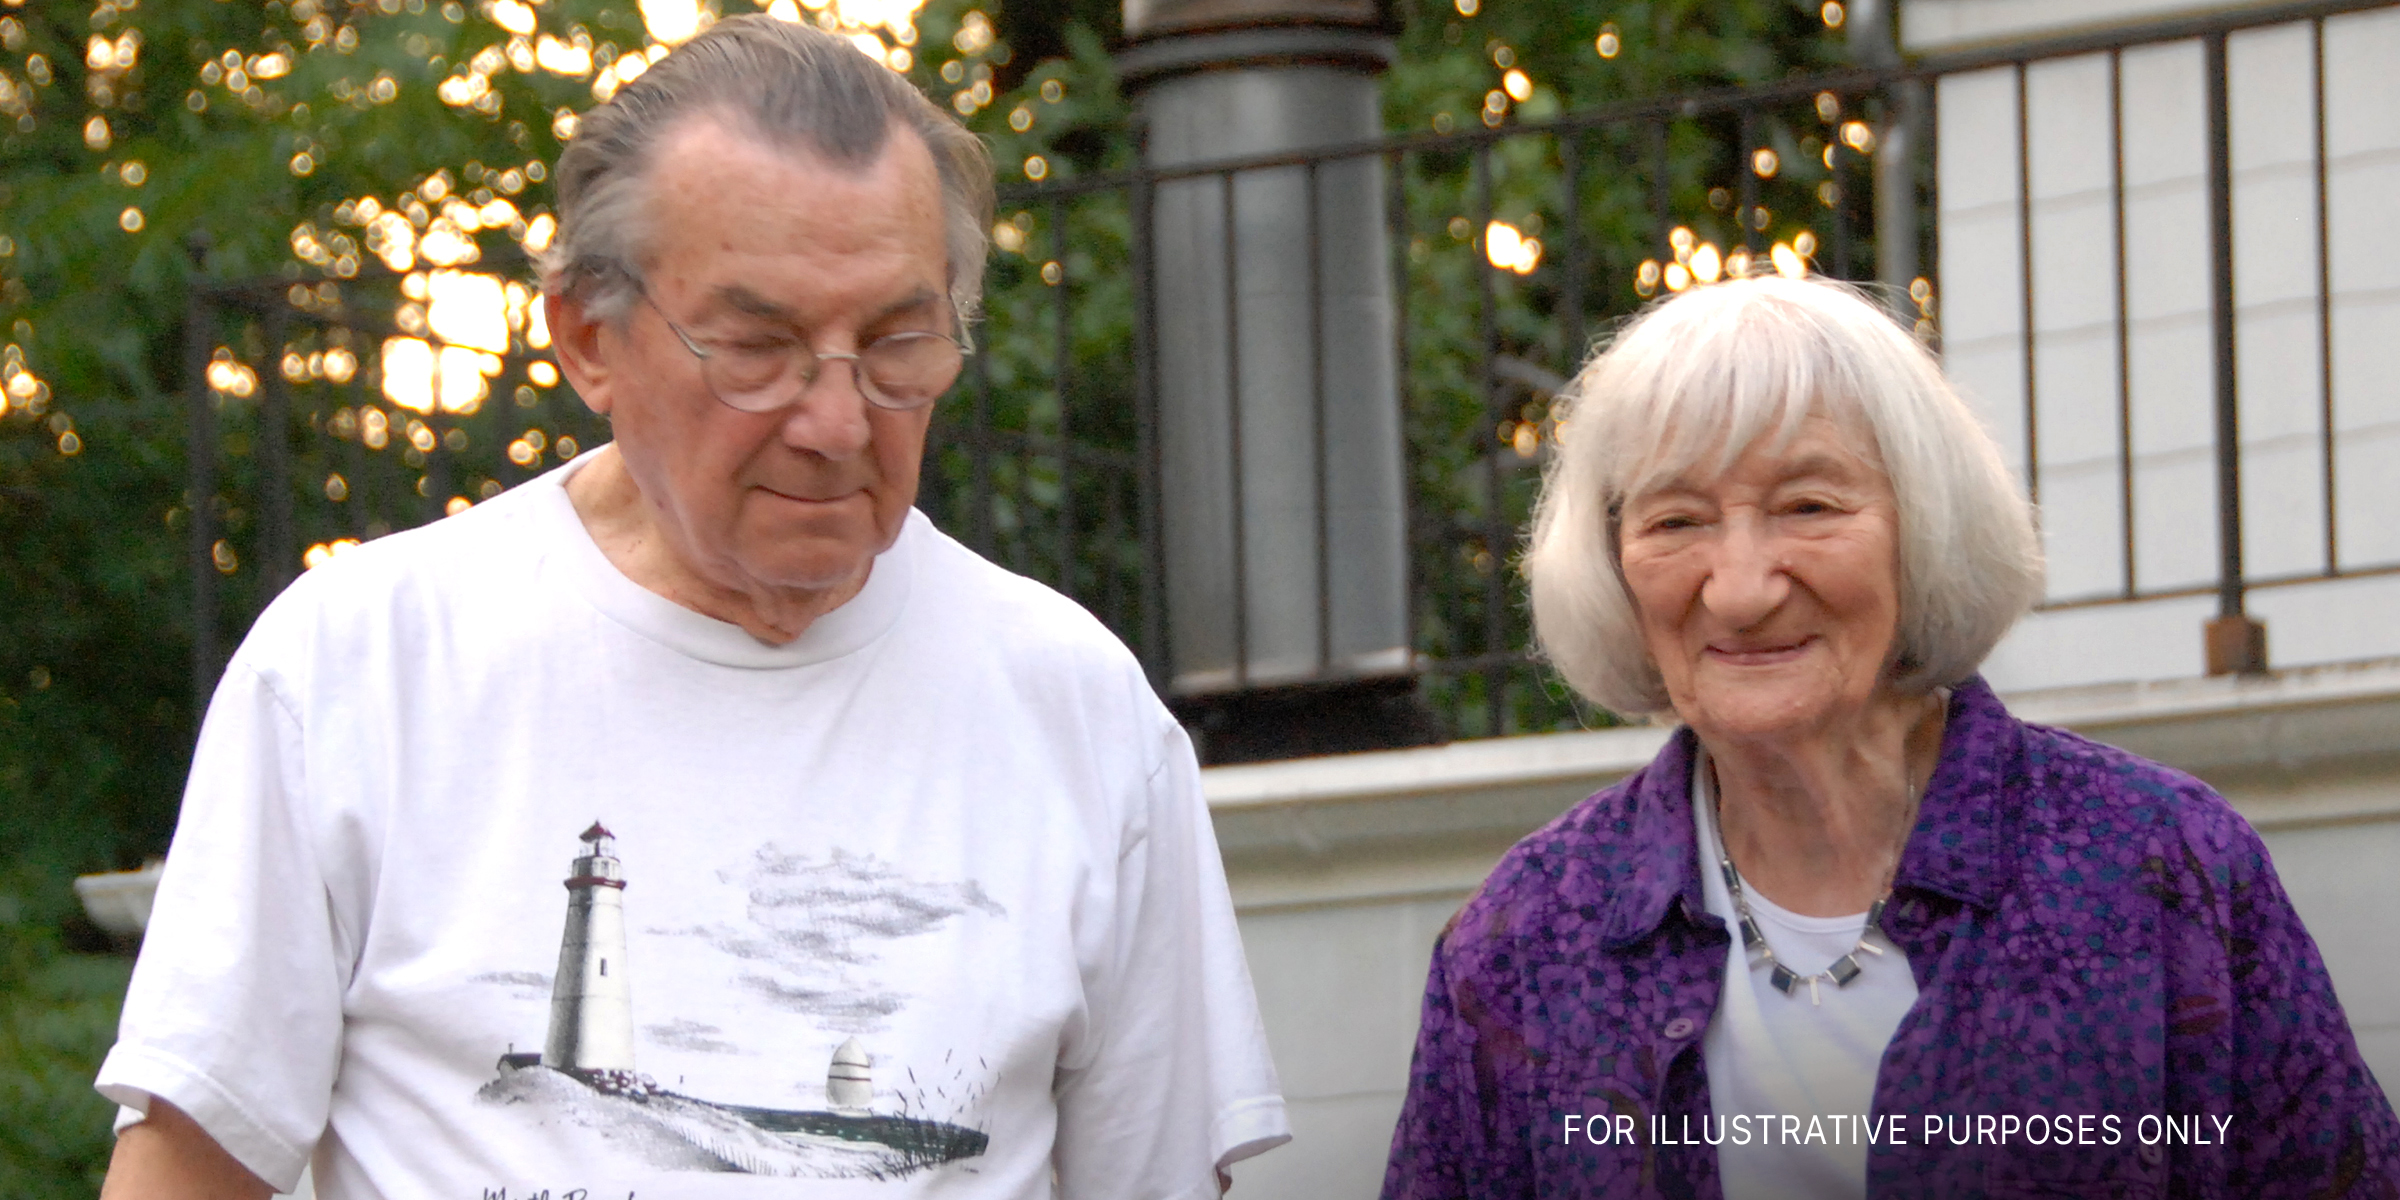 An elderly couple | Source: Flickr.com/mikegoren/CC BY 2.0